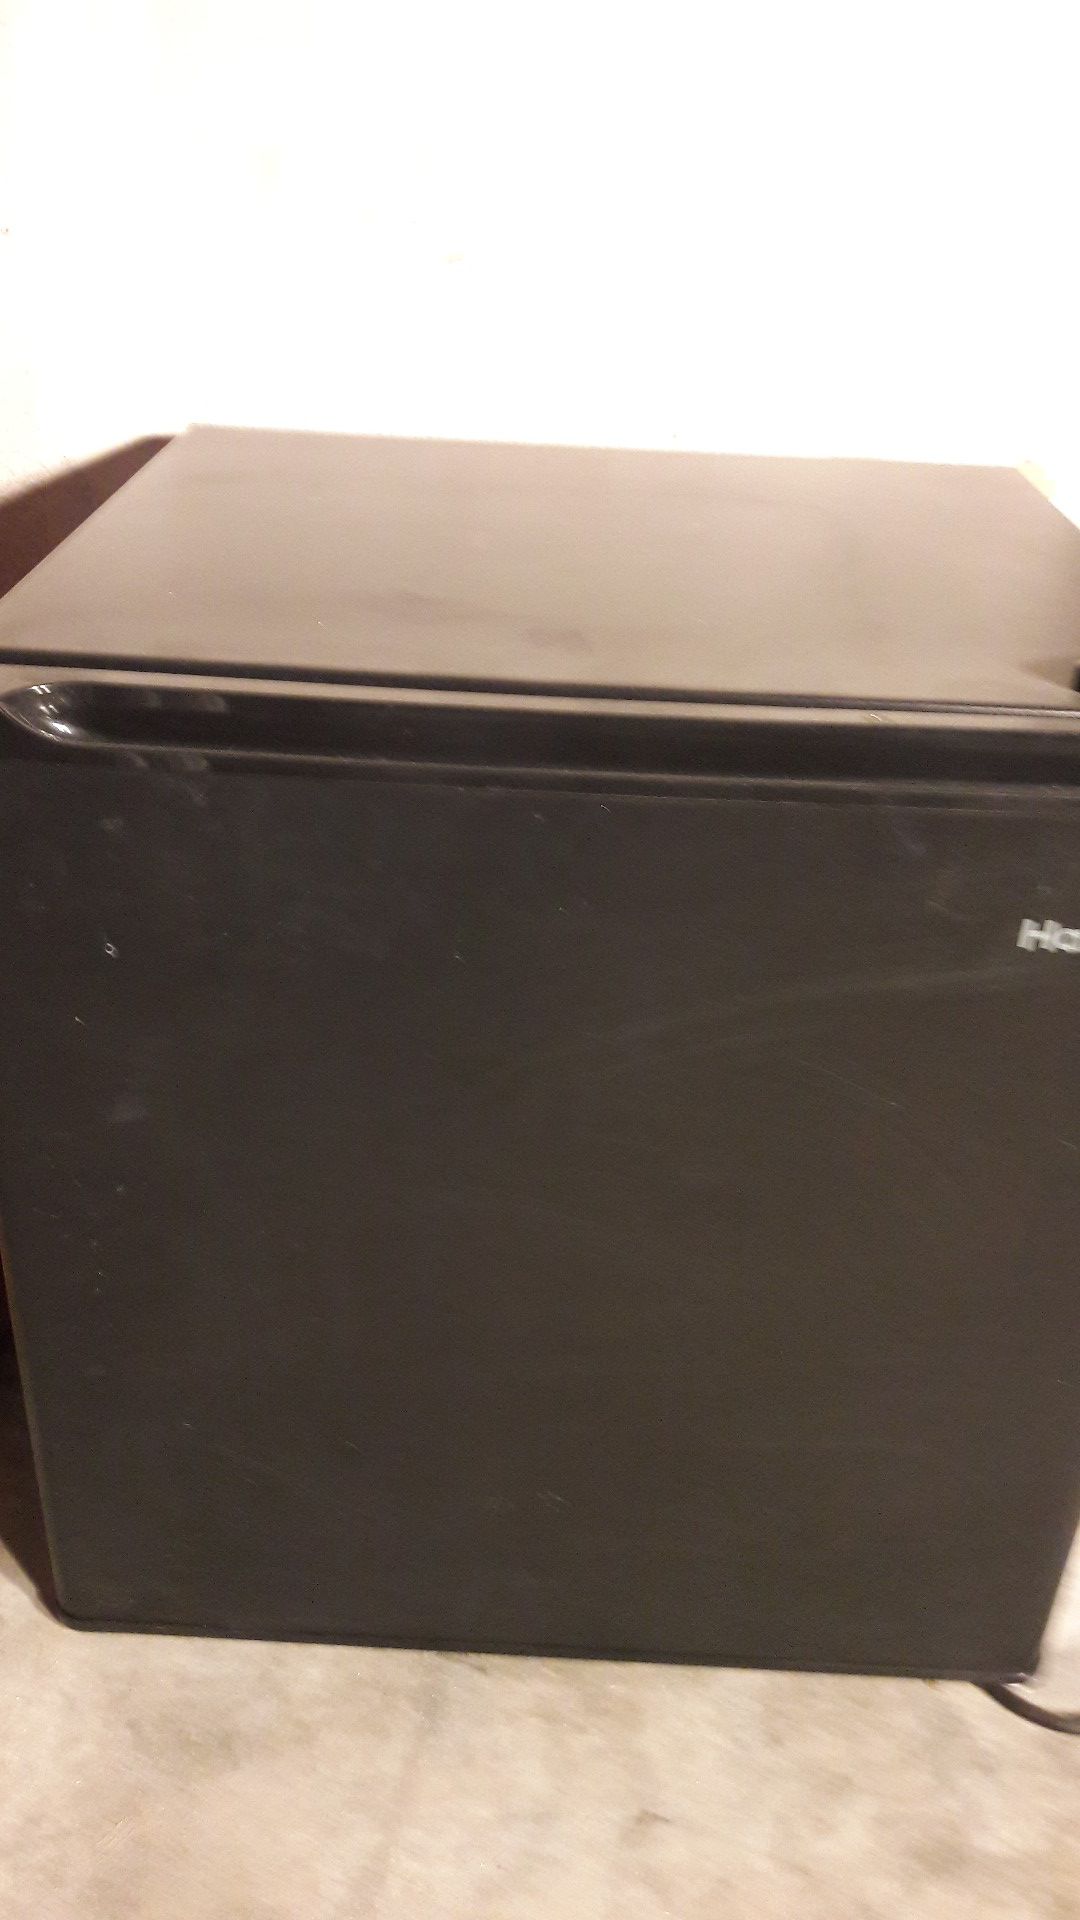 Small refrigerator